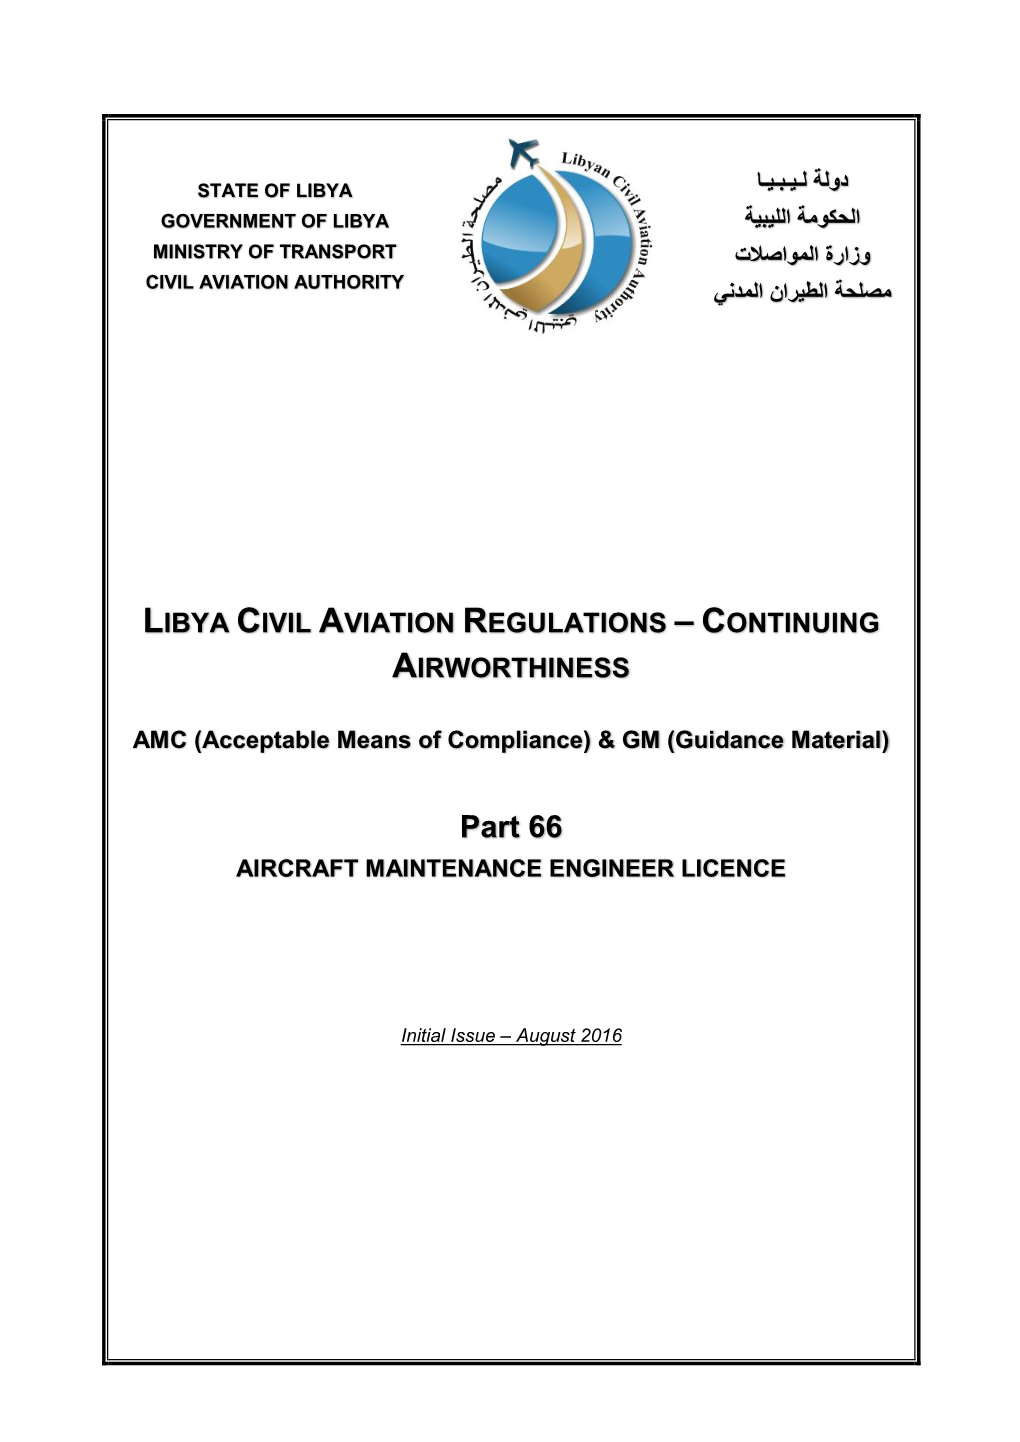 Part 66 AIRCRAFT MAINTENANCE ENGINEER LICENCE